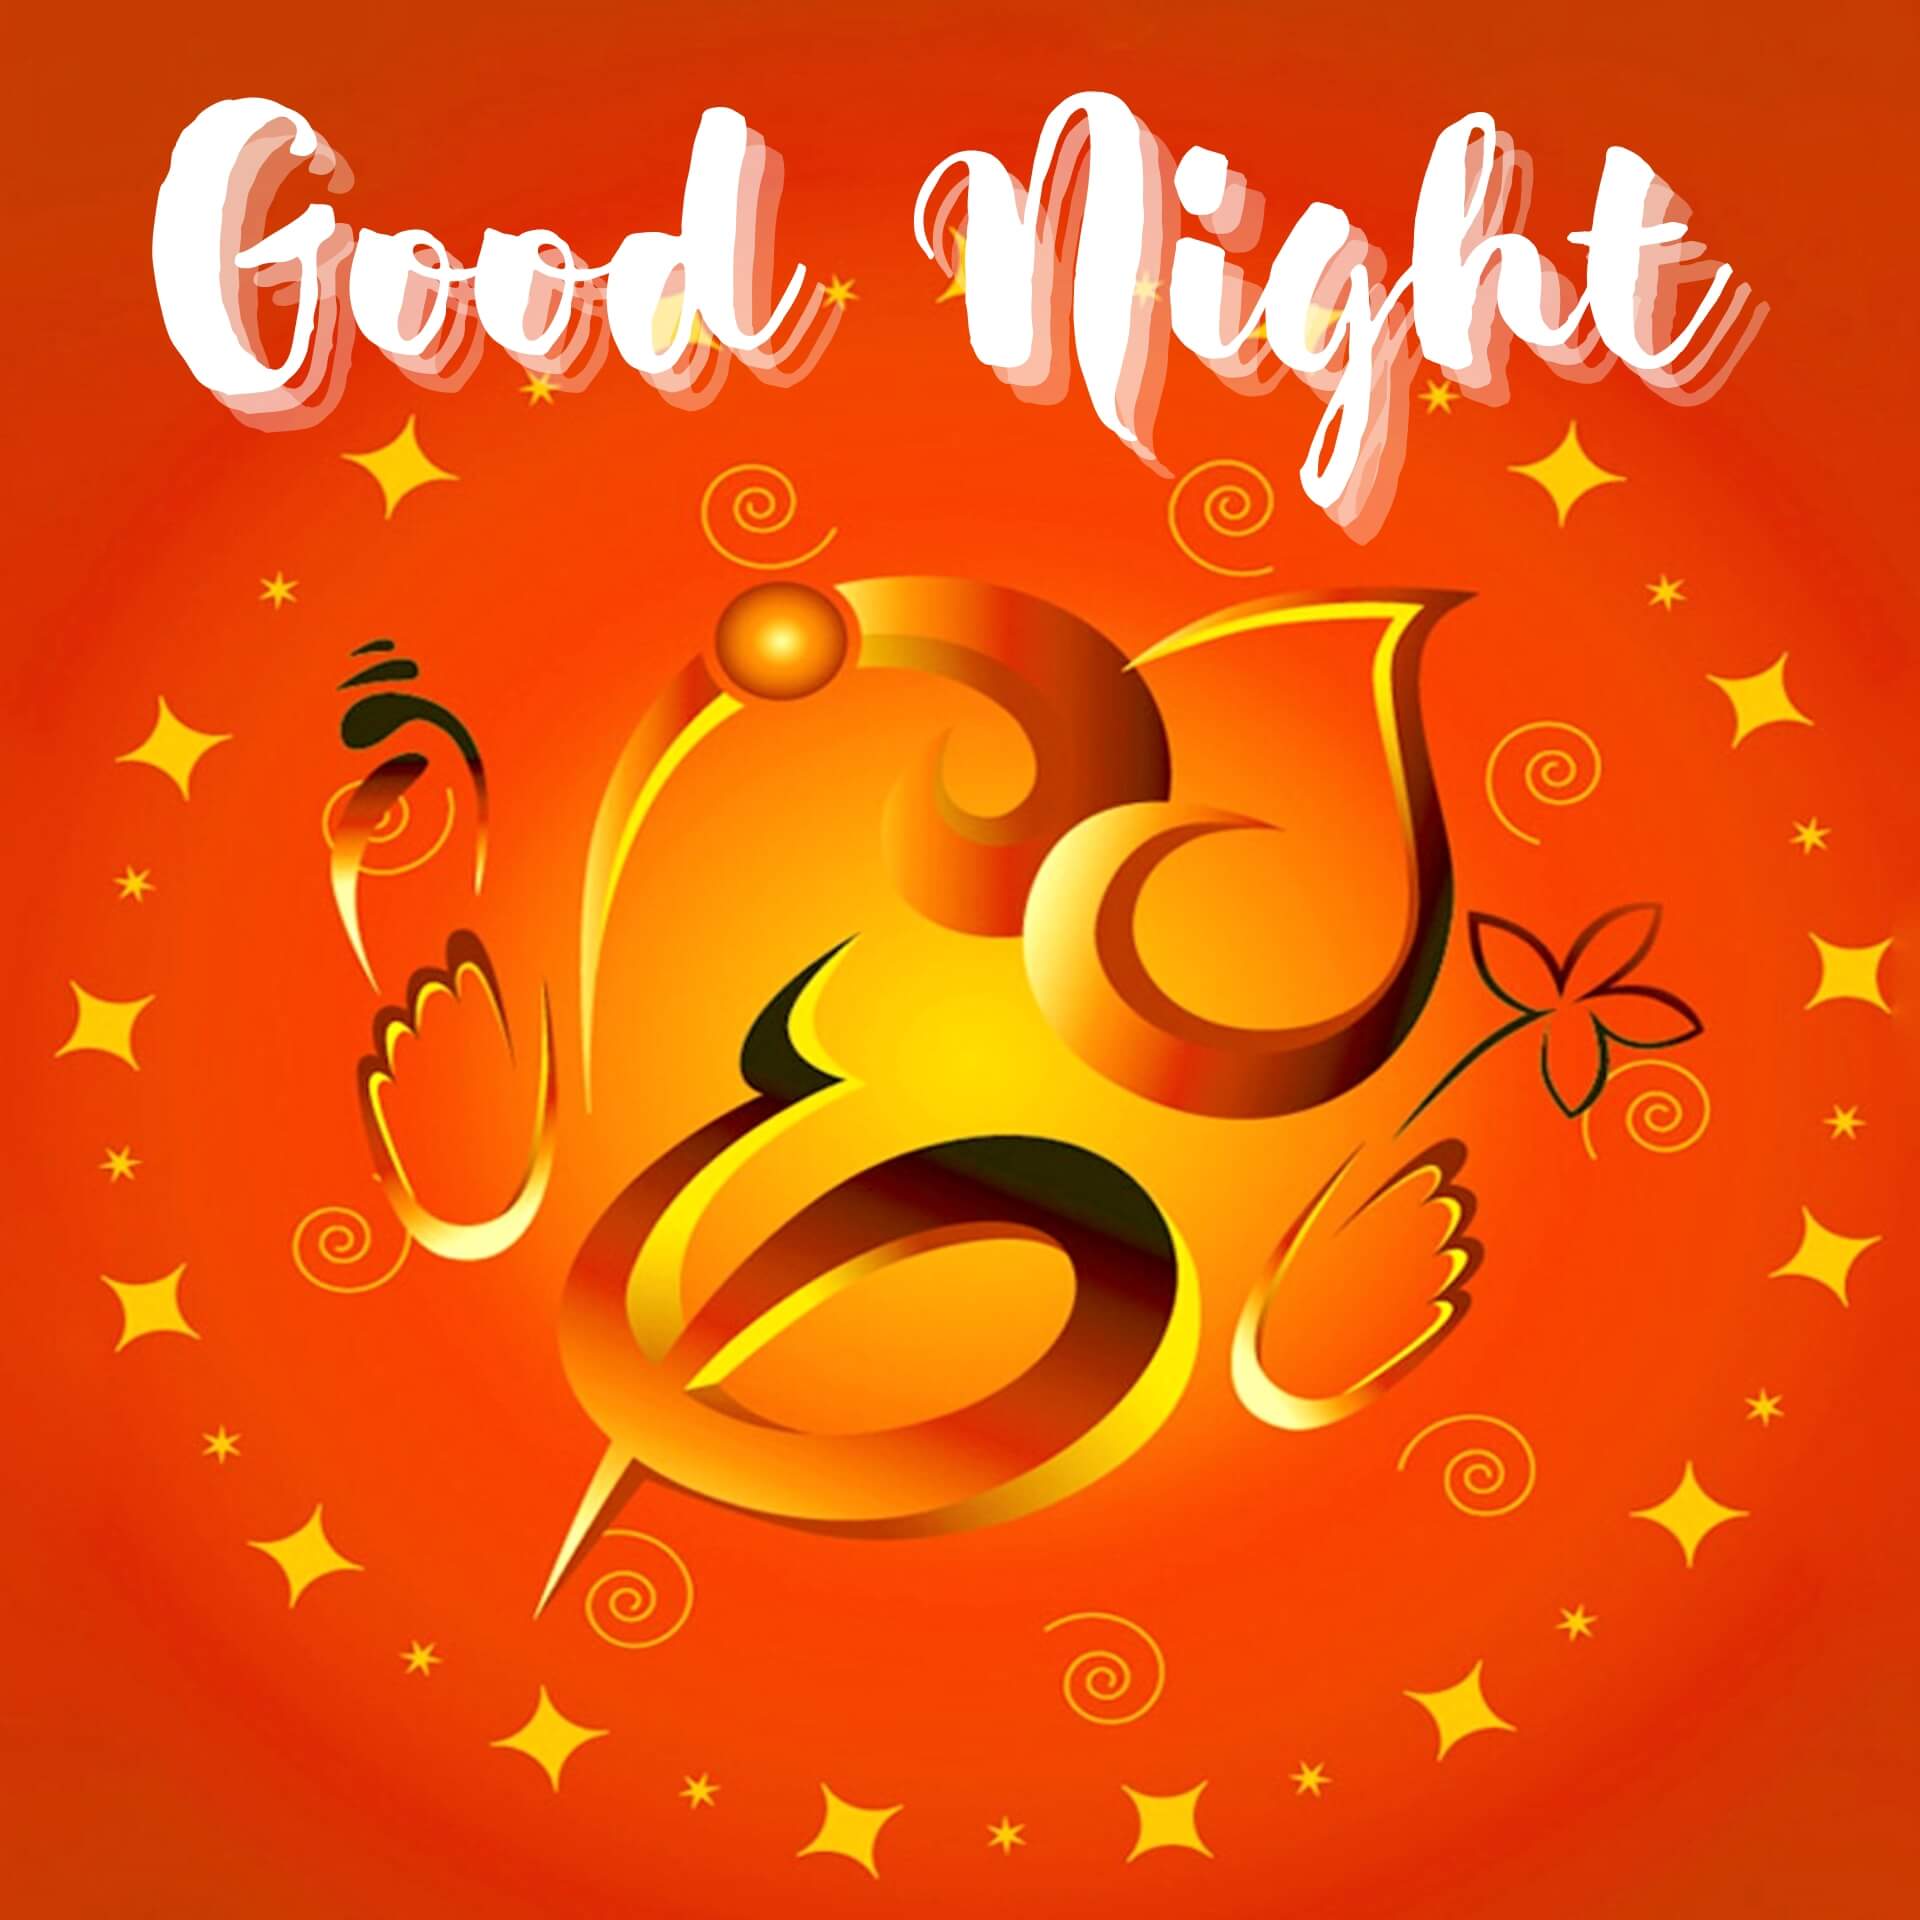 God Good Night Images Pics Wallpaper With Ganesha